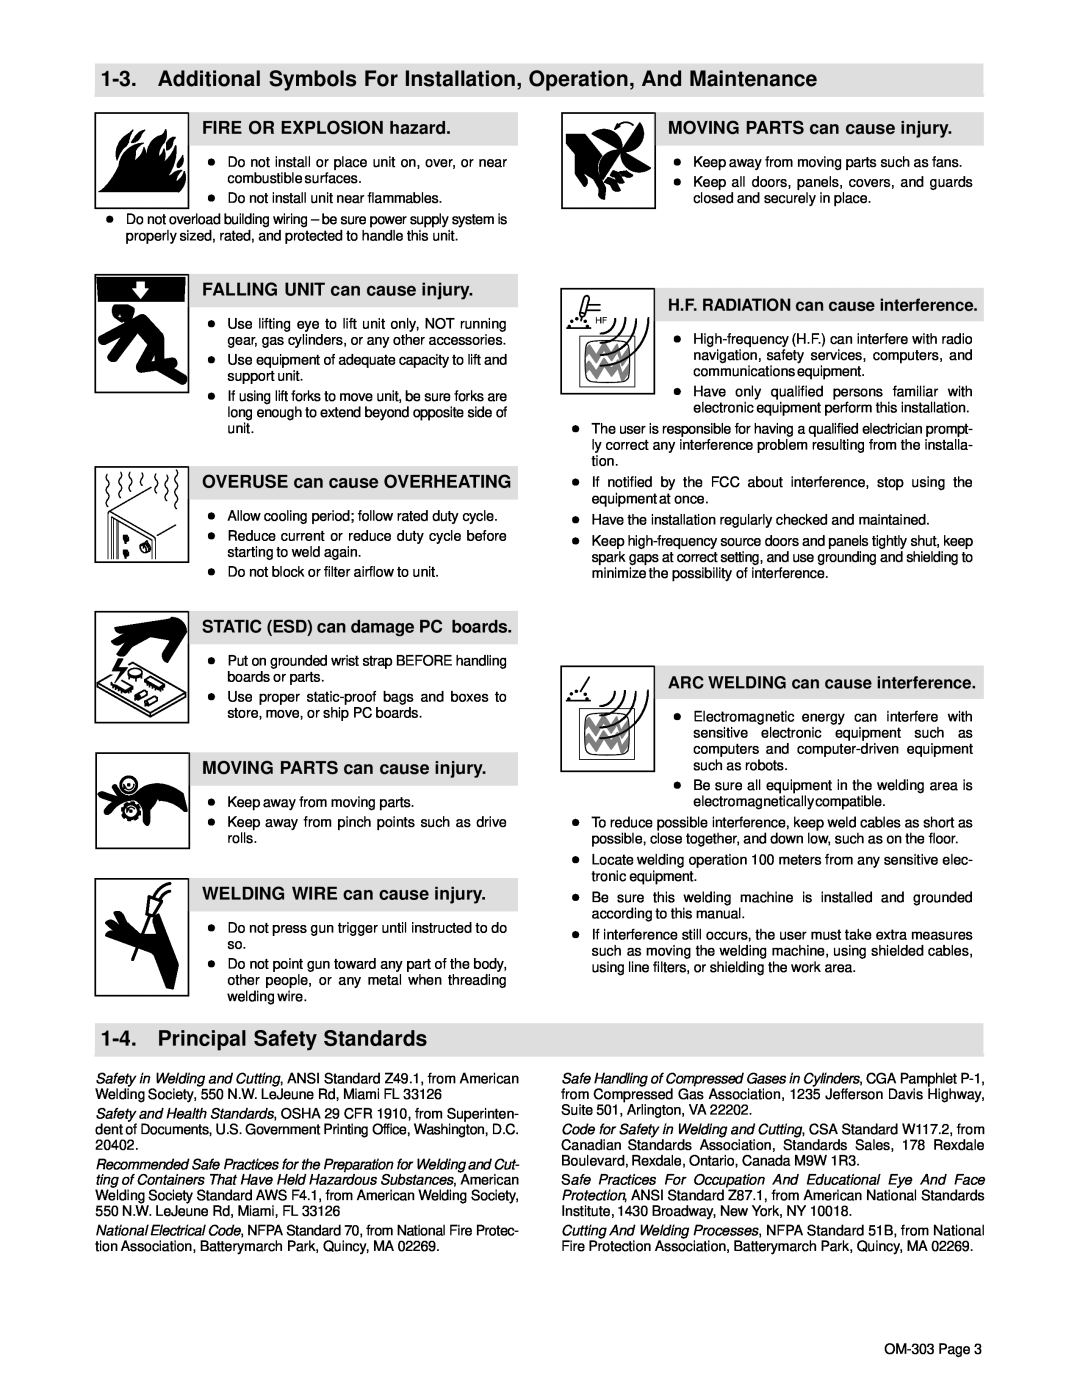 Hobart OM-303 manual Additional Symbols For Installation, Operation, And Maintenance, Principal Safety Standards 